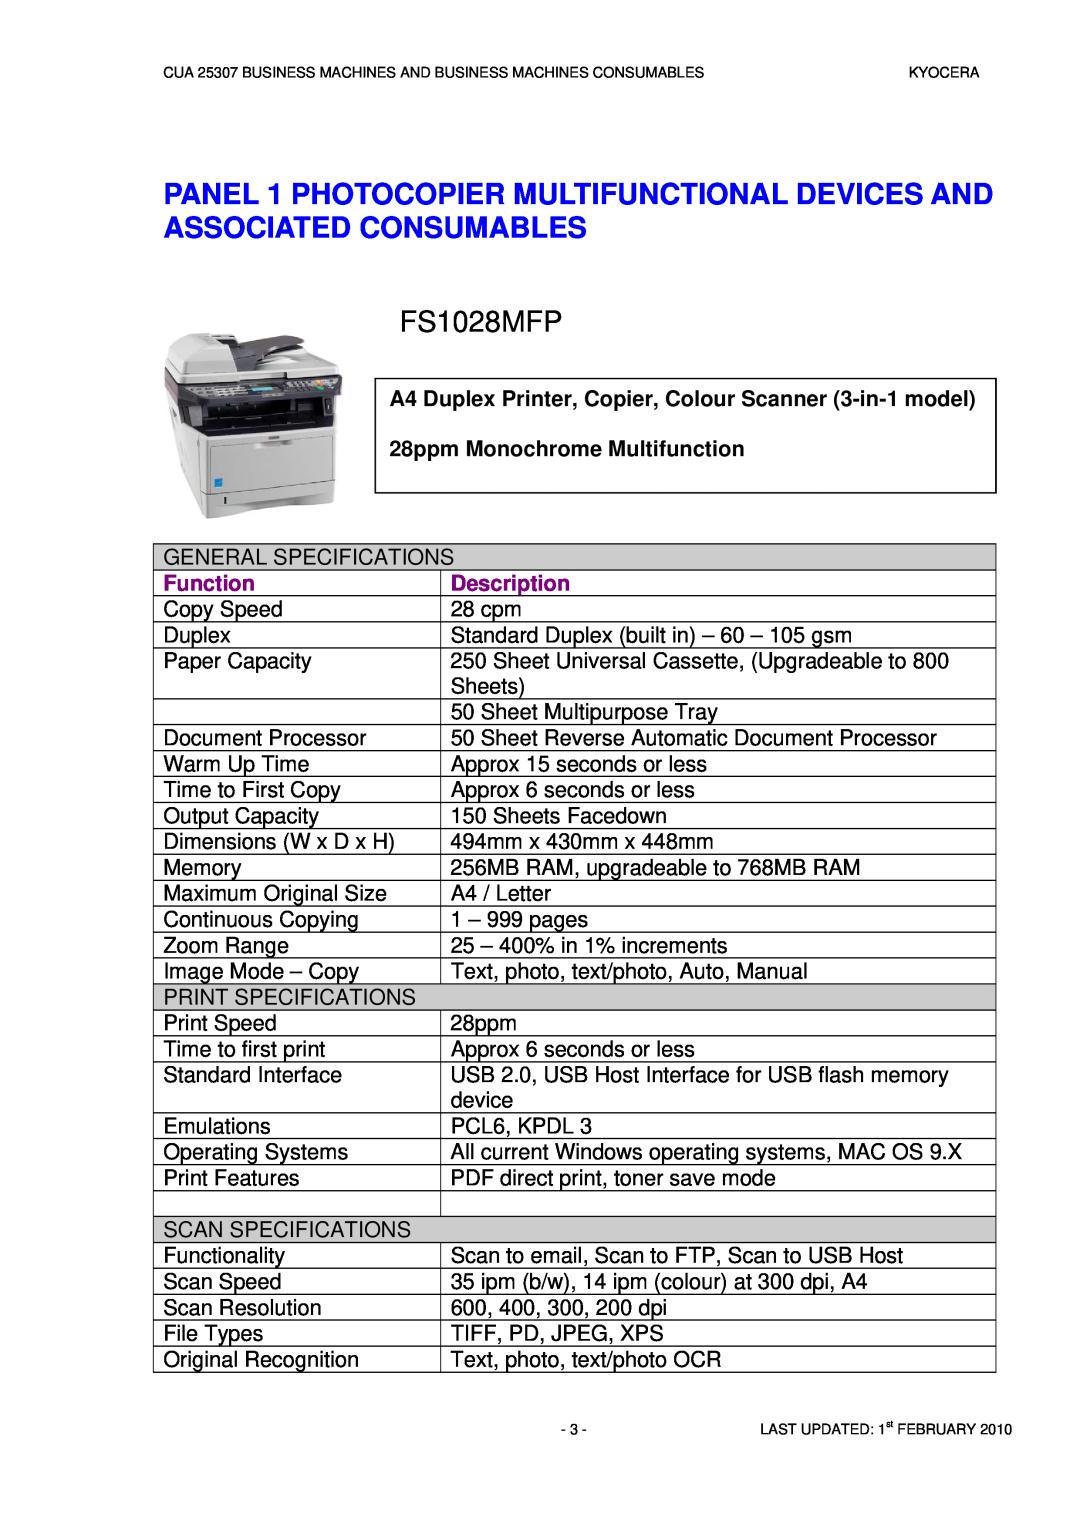 Kyocera CUA 25307 manual FS1028MFP, 28ppm Monochrome Multifunction, Function, Description 28 cpm 